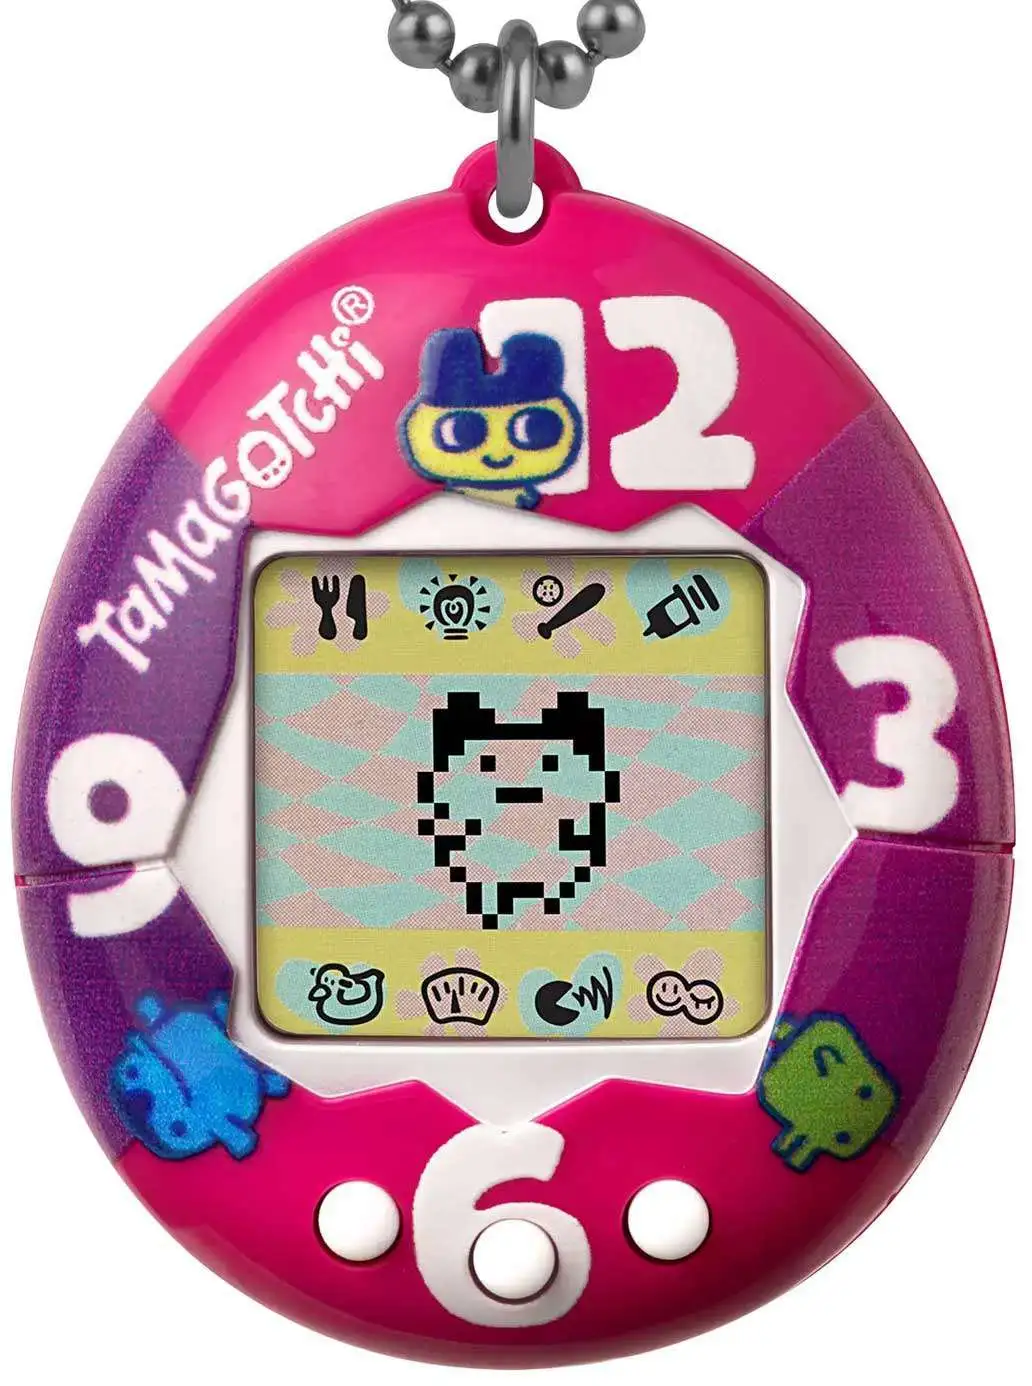 Pink Bandai Original Tamagotchi 20th Anniversary Virtual Digital Pet Toy 